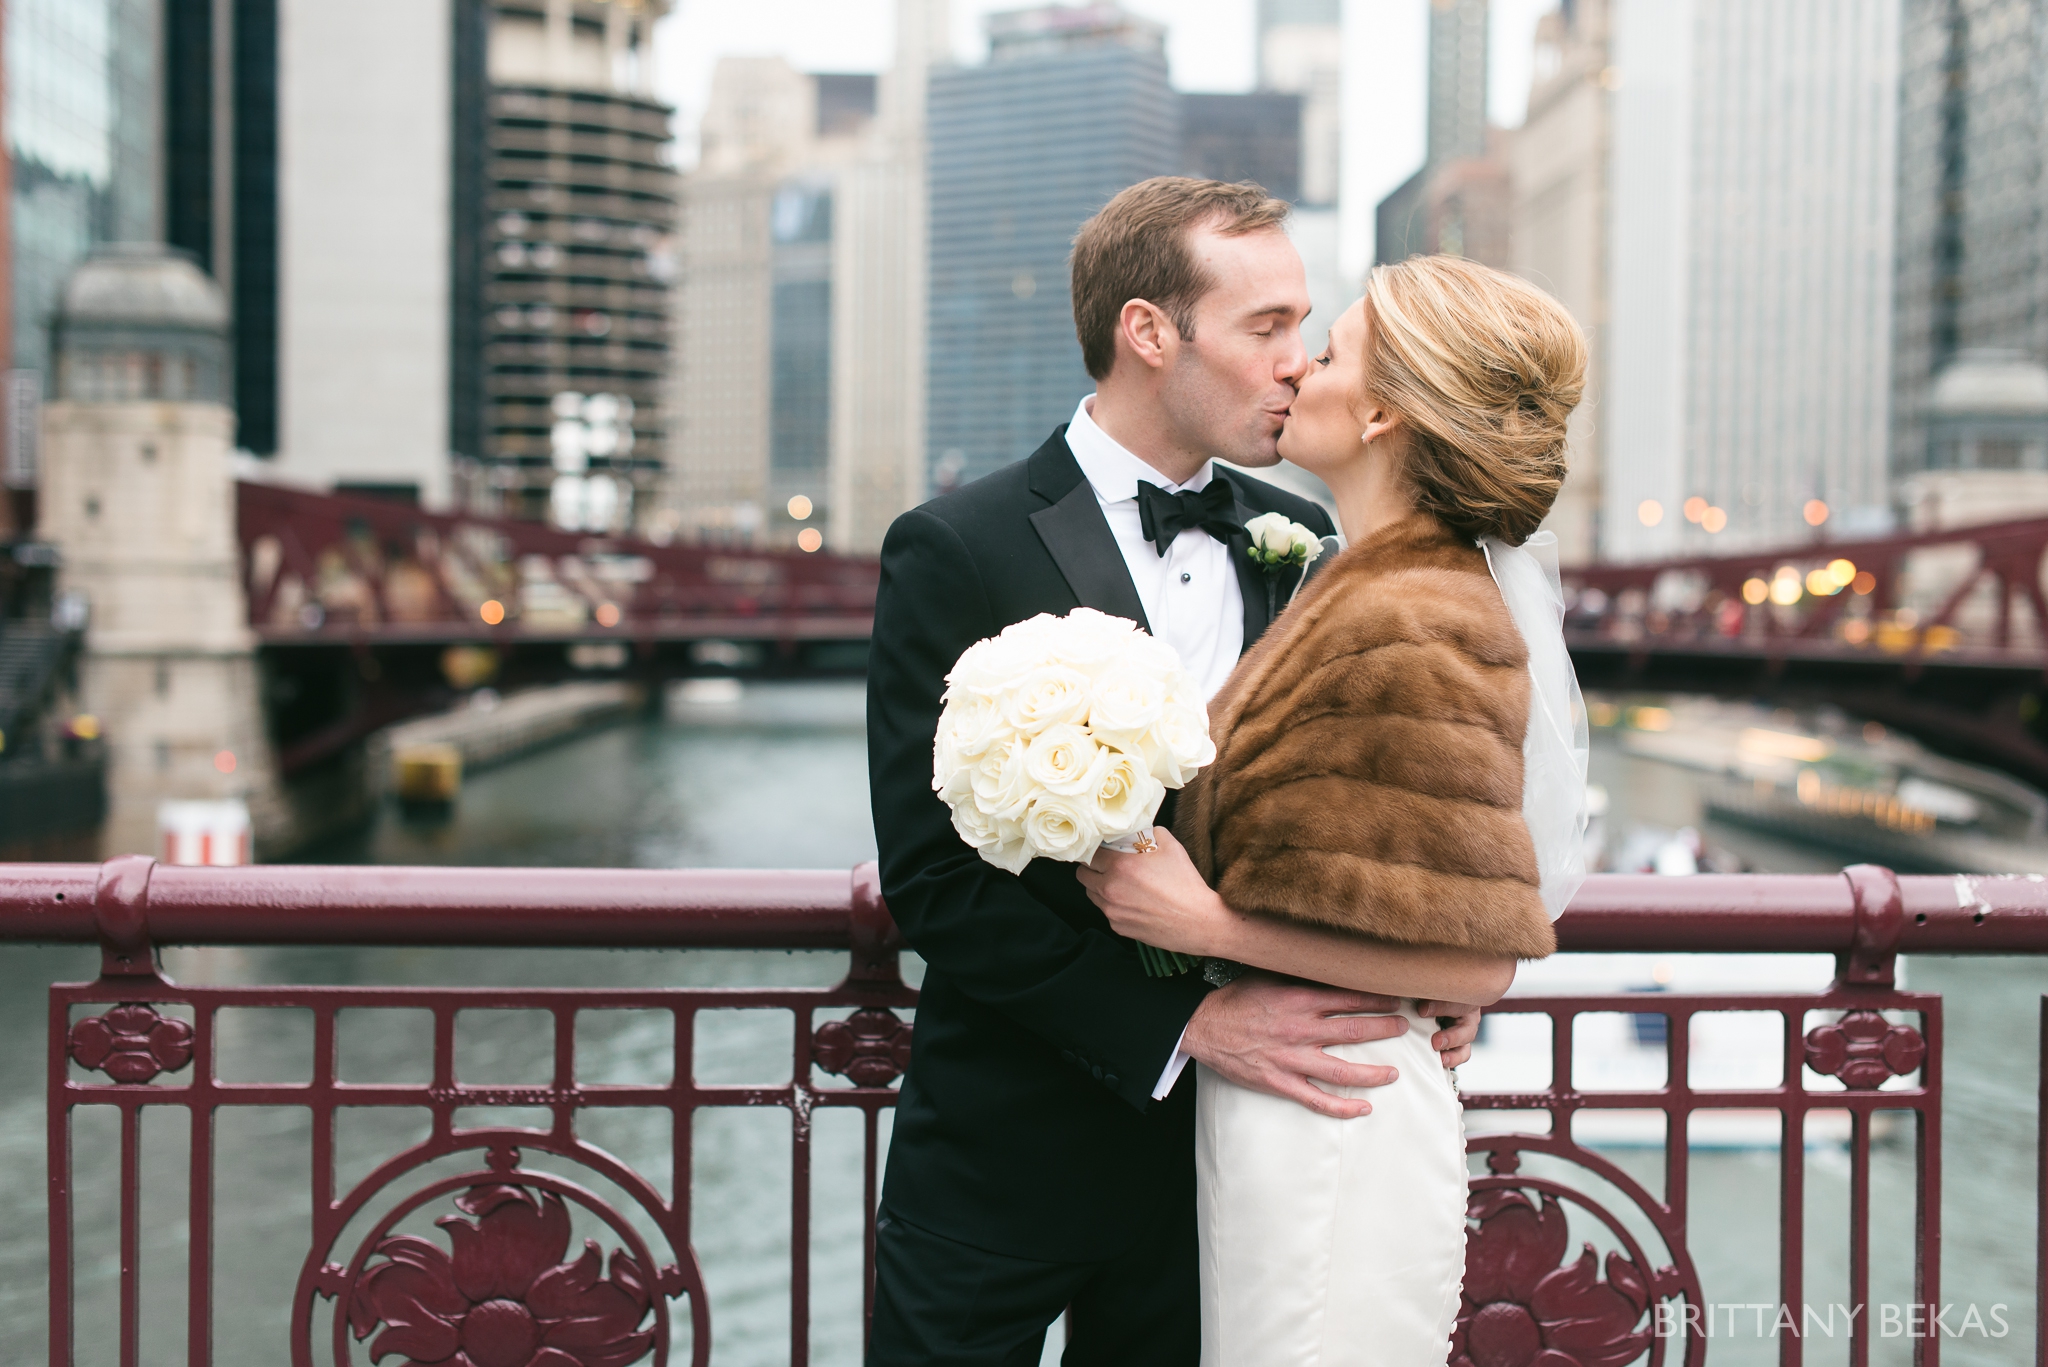 Chicago Wedding Hotel Allegro Wedding Photos - Brittany Bekas Photography_0026